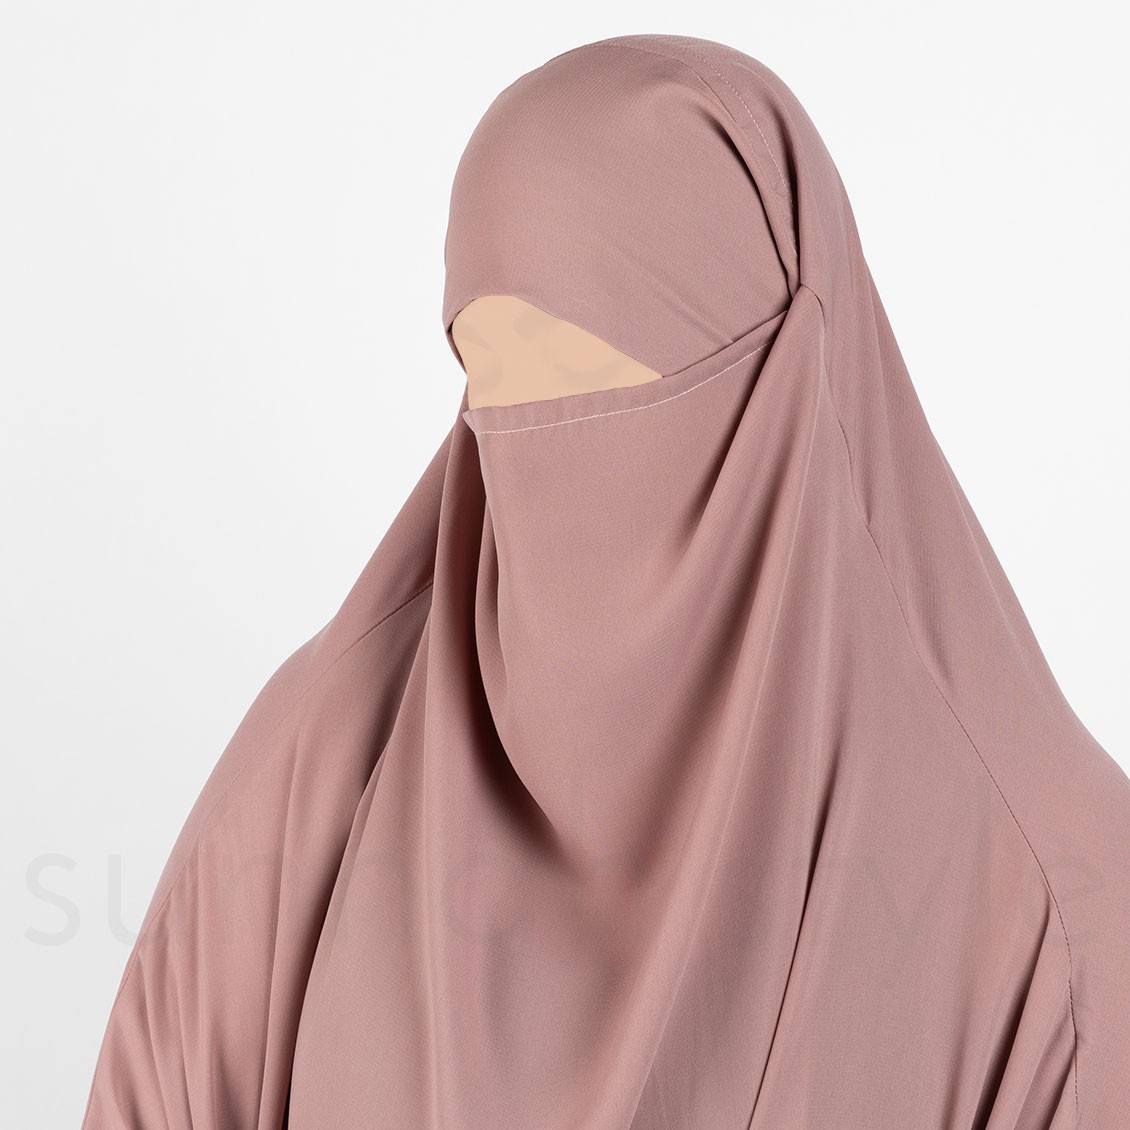 Sunnah Style Plain Full Length Jilbab Oyster Pink